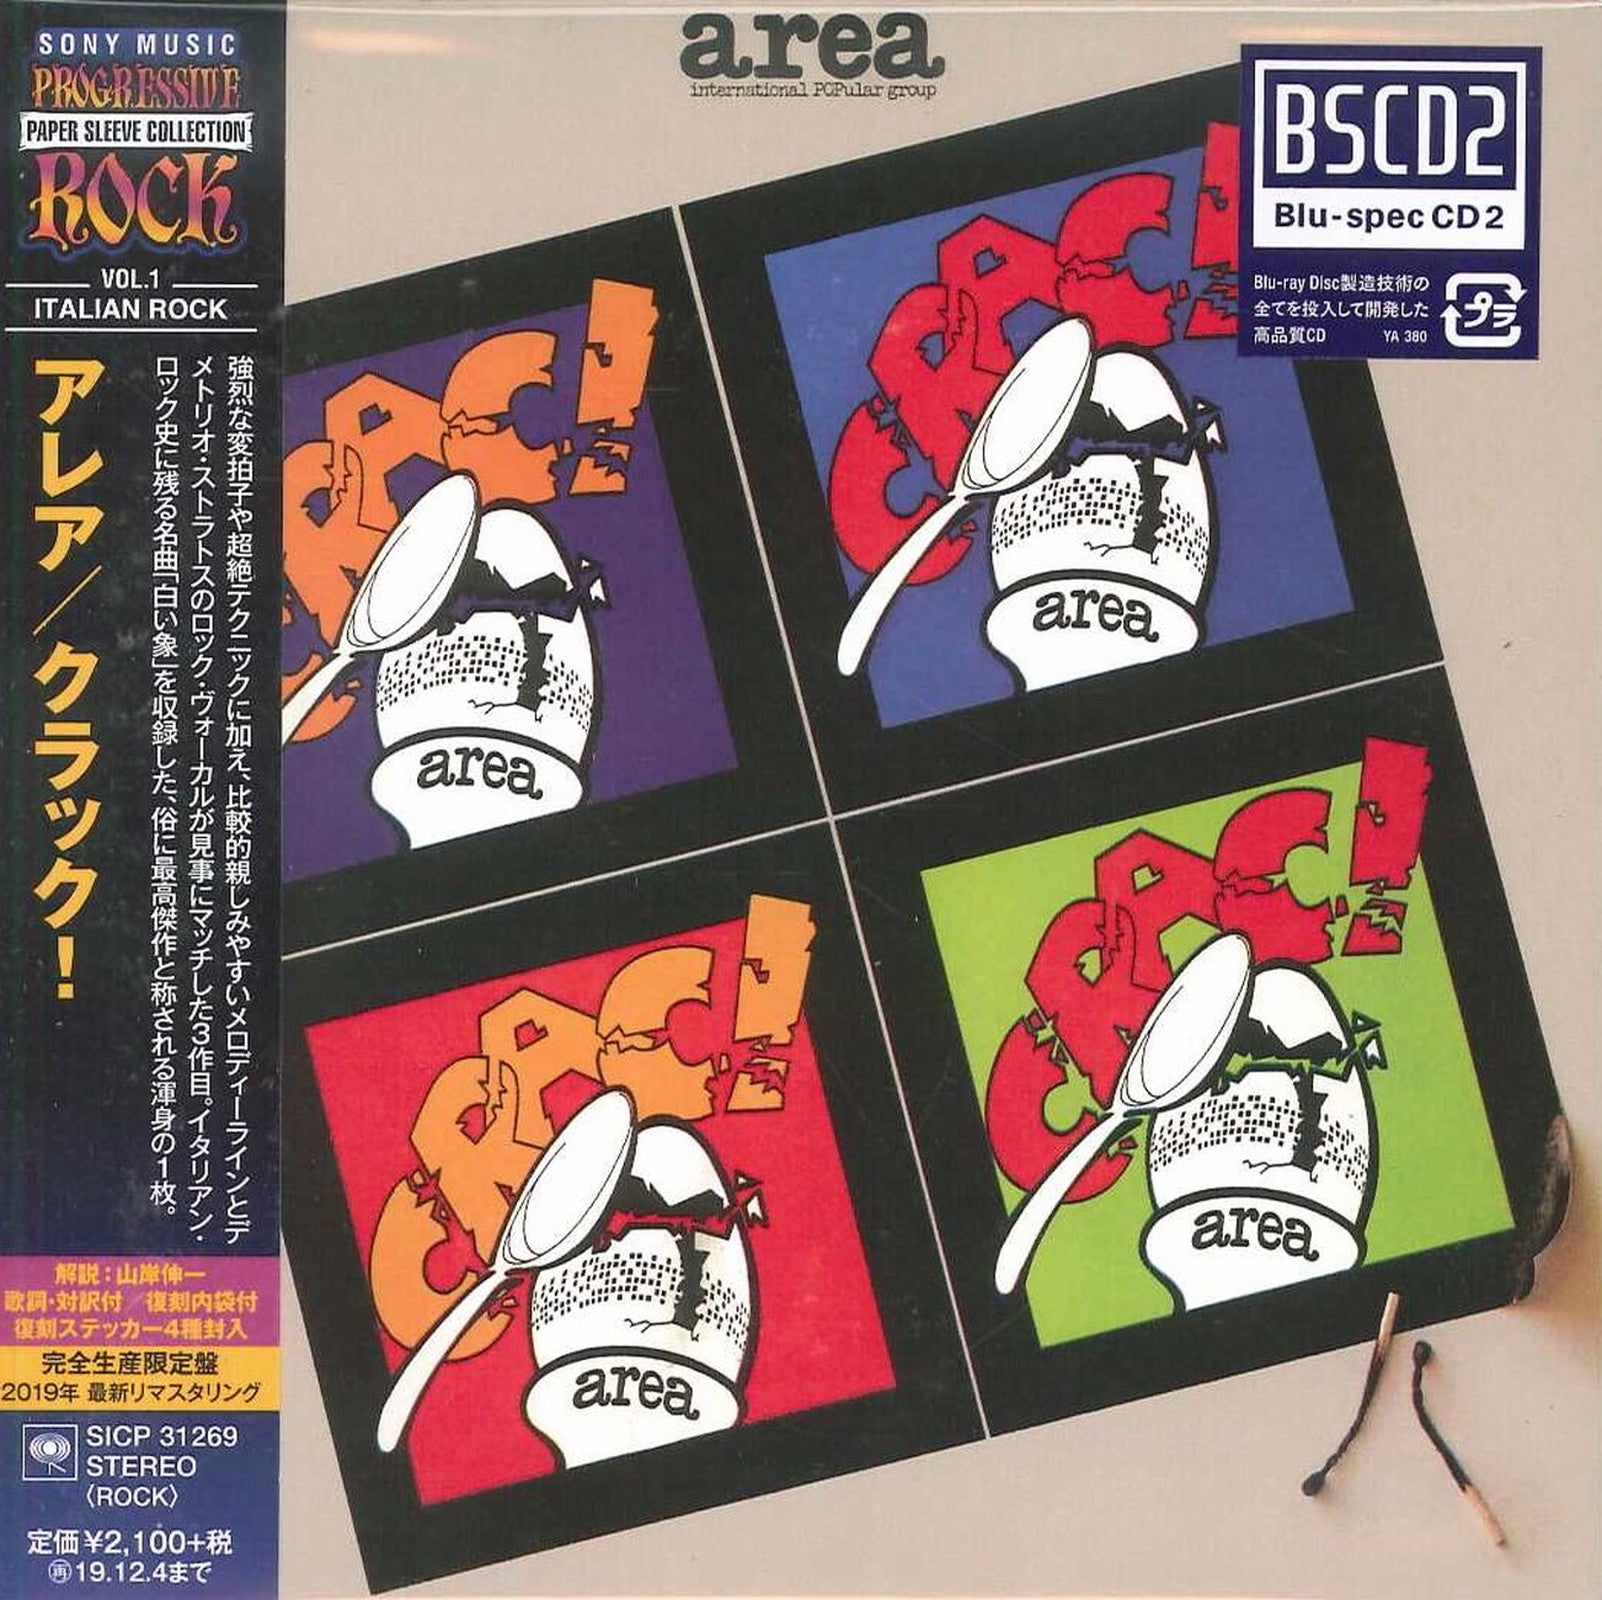 Area - Crac! - Japan Mini LP Blu-spec CD2 Limited Edition – CDs